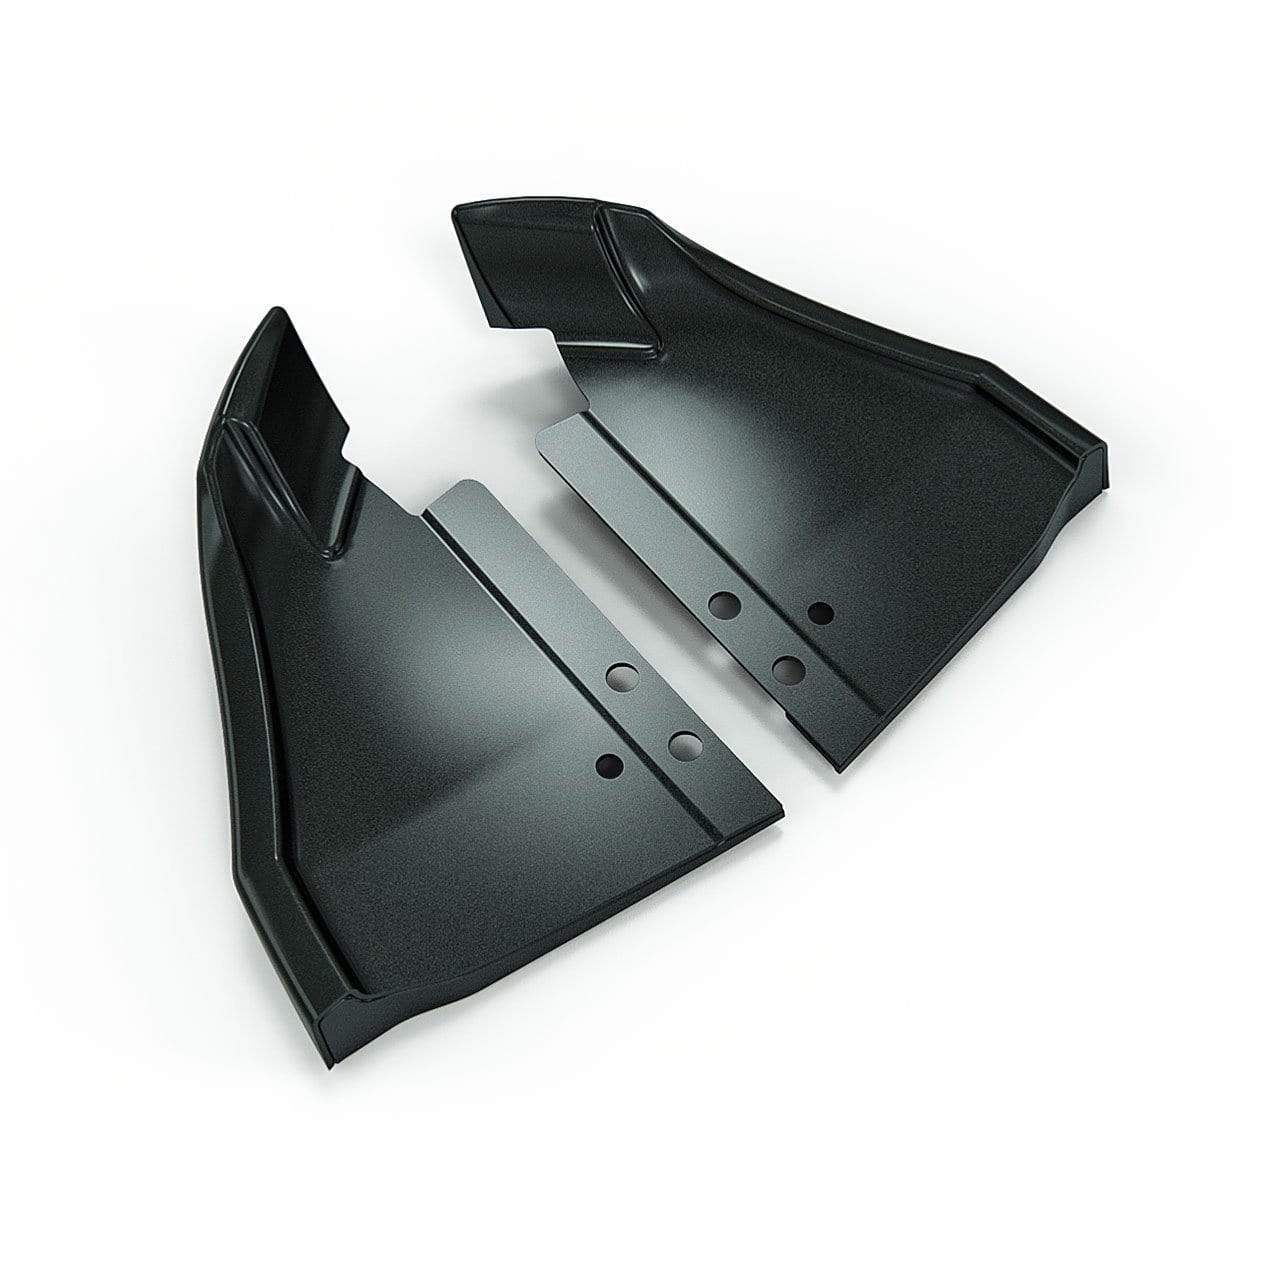 ACS Composite C7 Rear Fascia Extensions in Carbon Flash Metallic Black [45-4-183]HCB for Corvette ZR1, Z06, Grand Sport & Stingray.